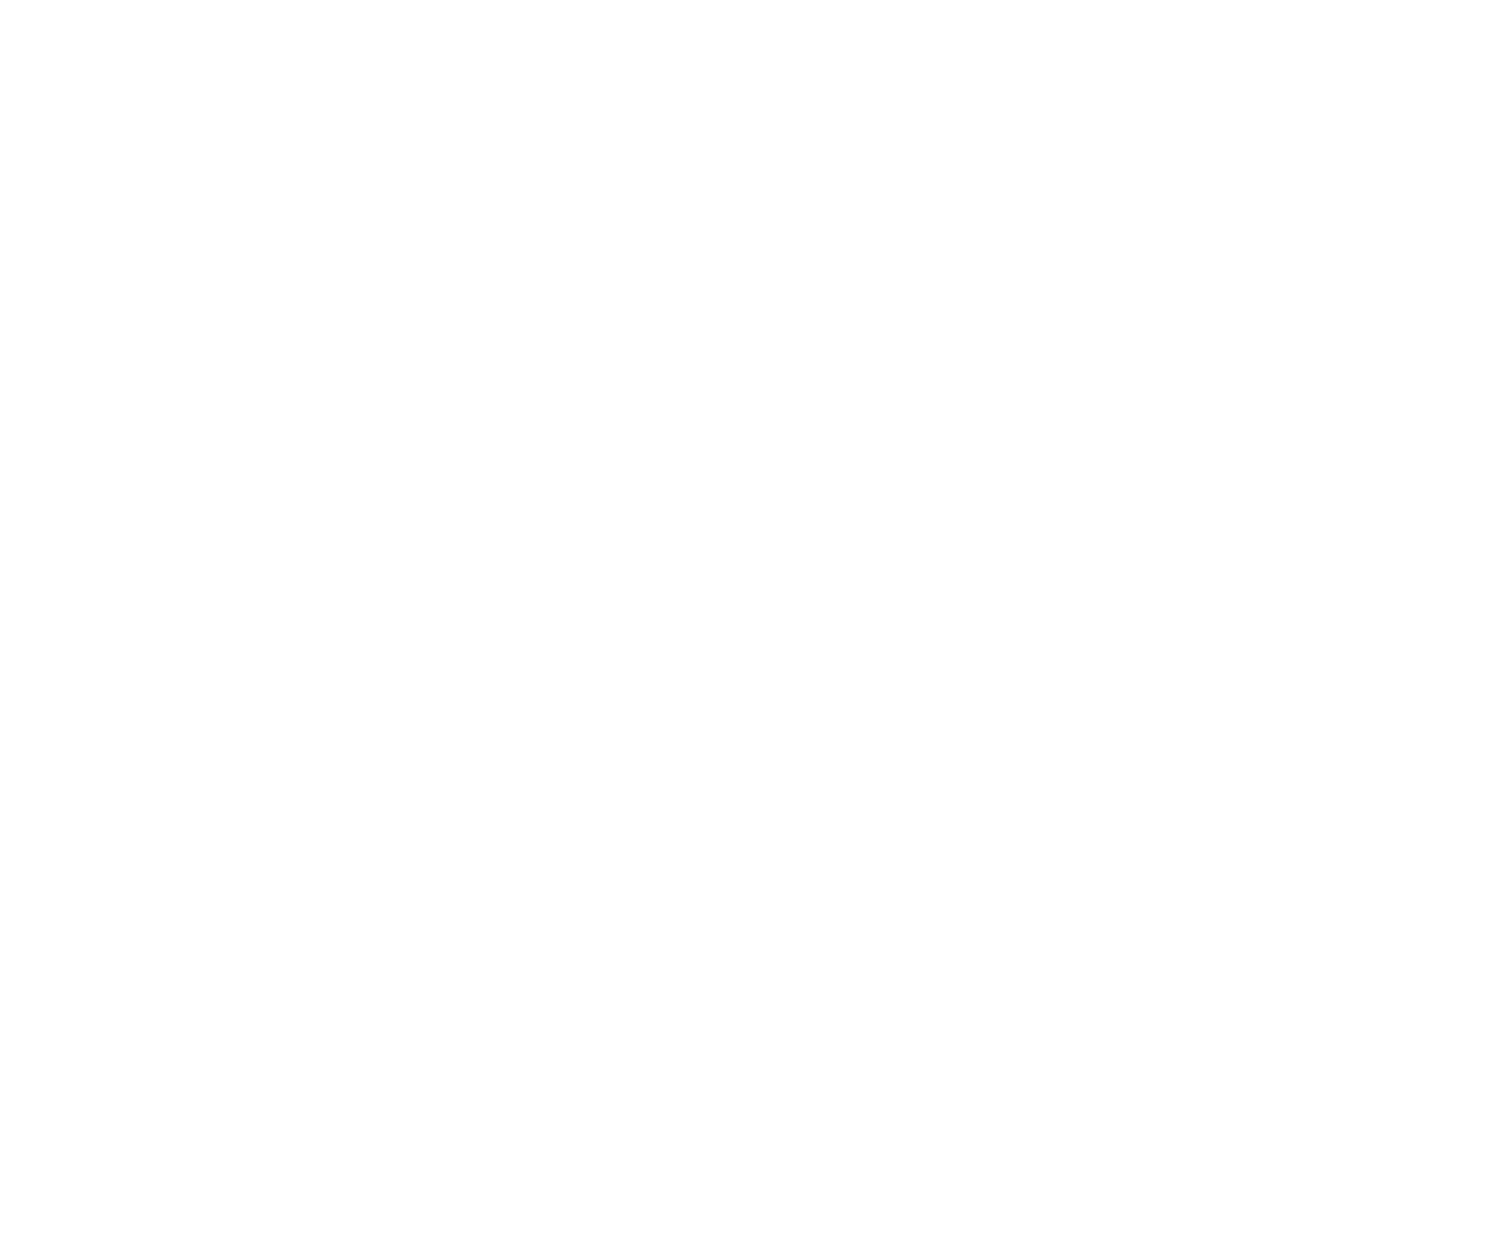 Westbury Wildlife Park Foundation